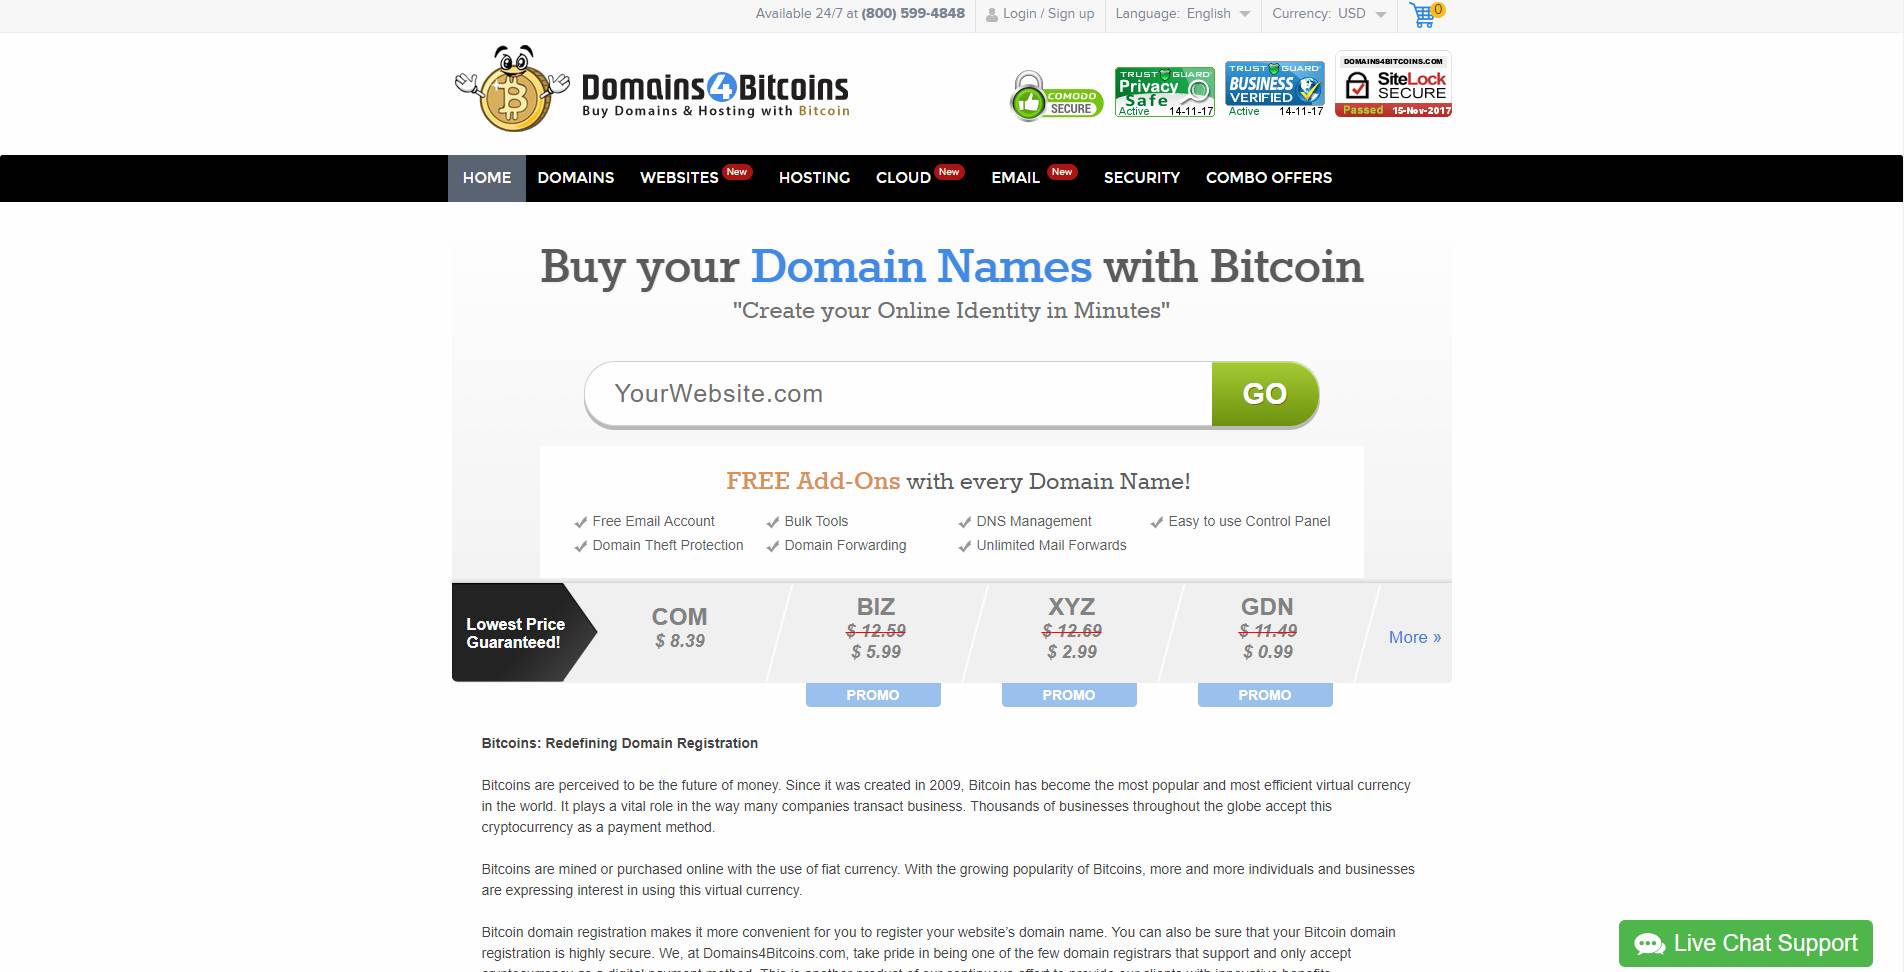 Domains4Bitcoins